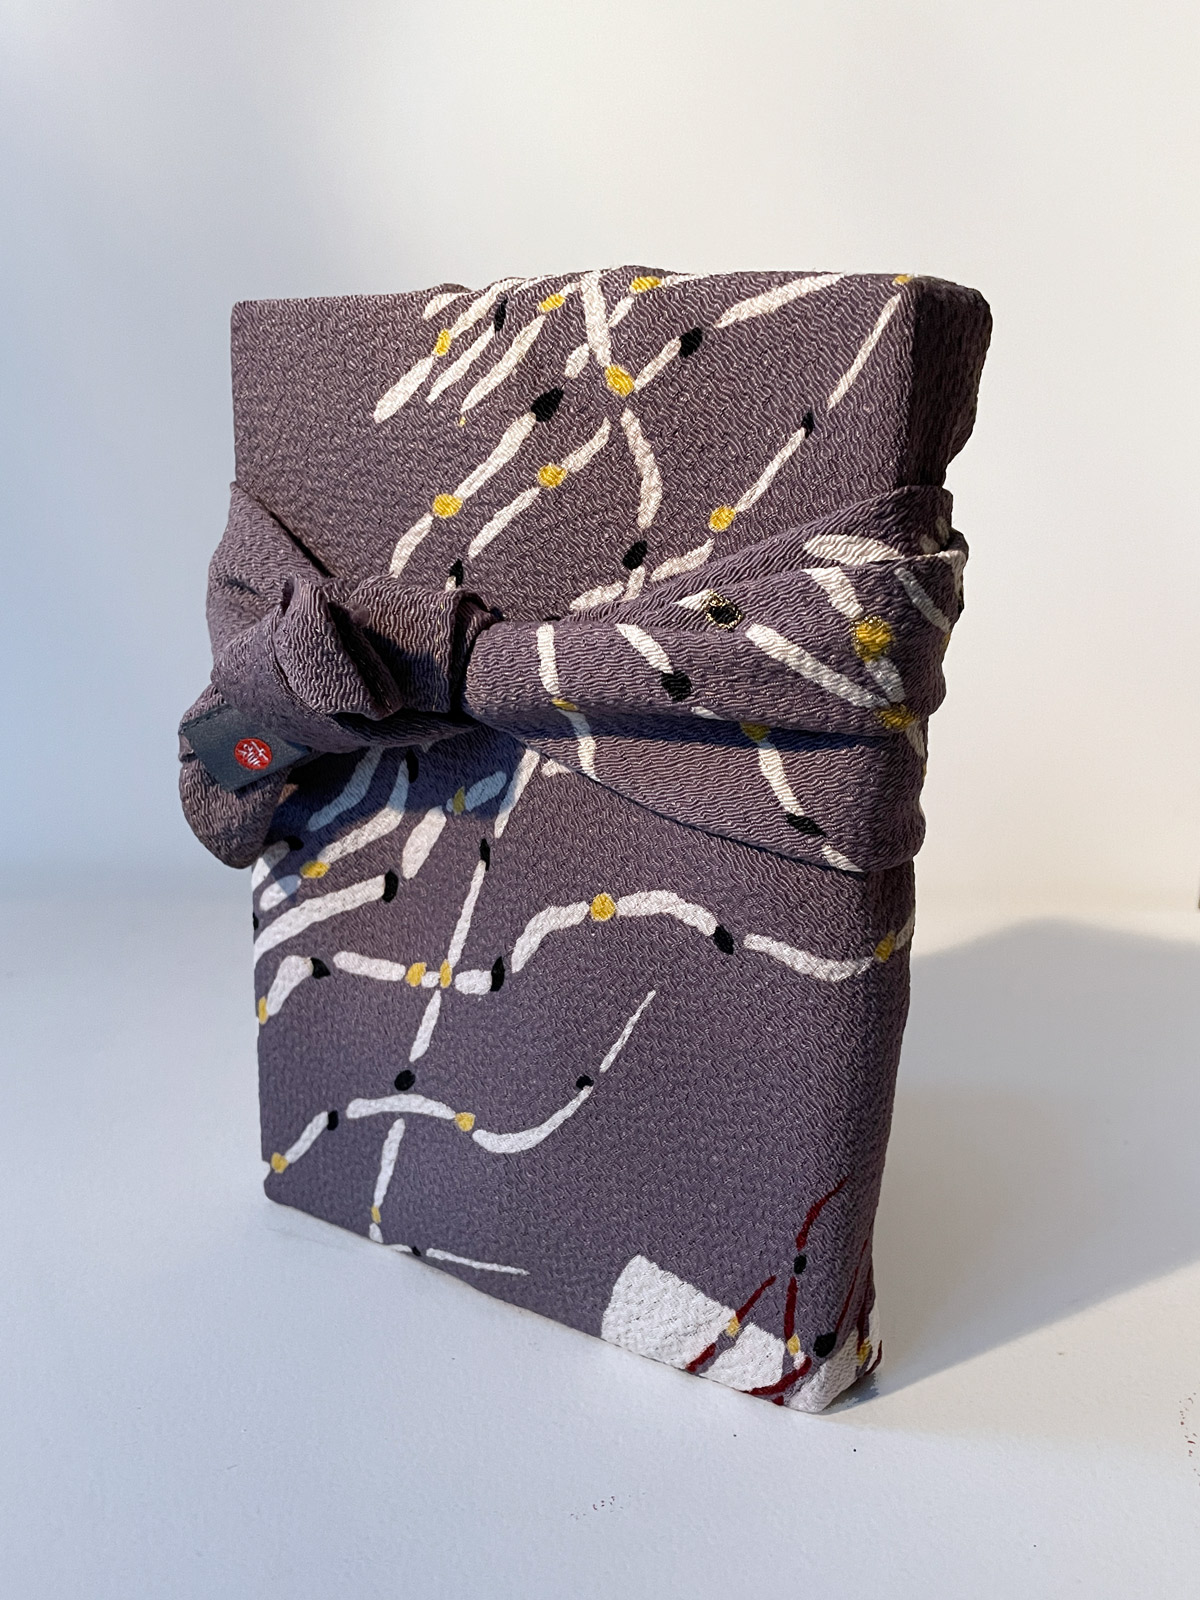 Furoshiki (wrapping cloth) in lavender-gray color